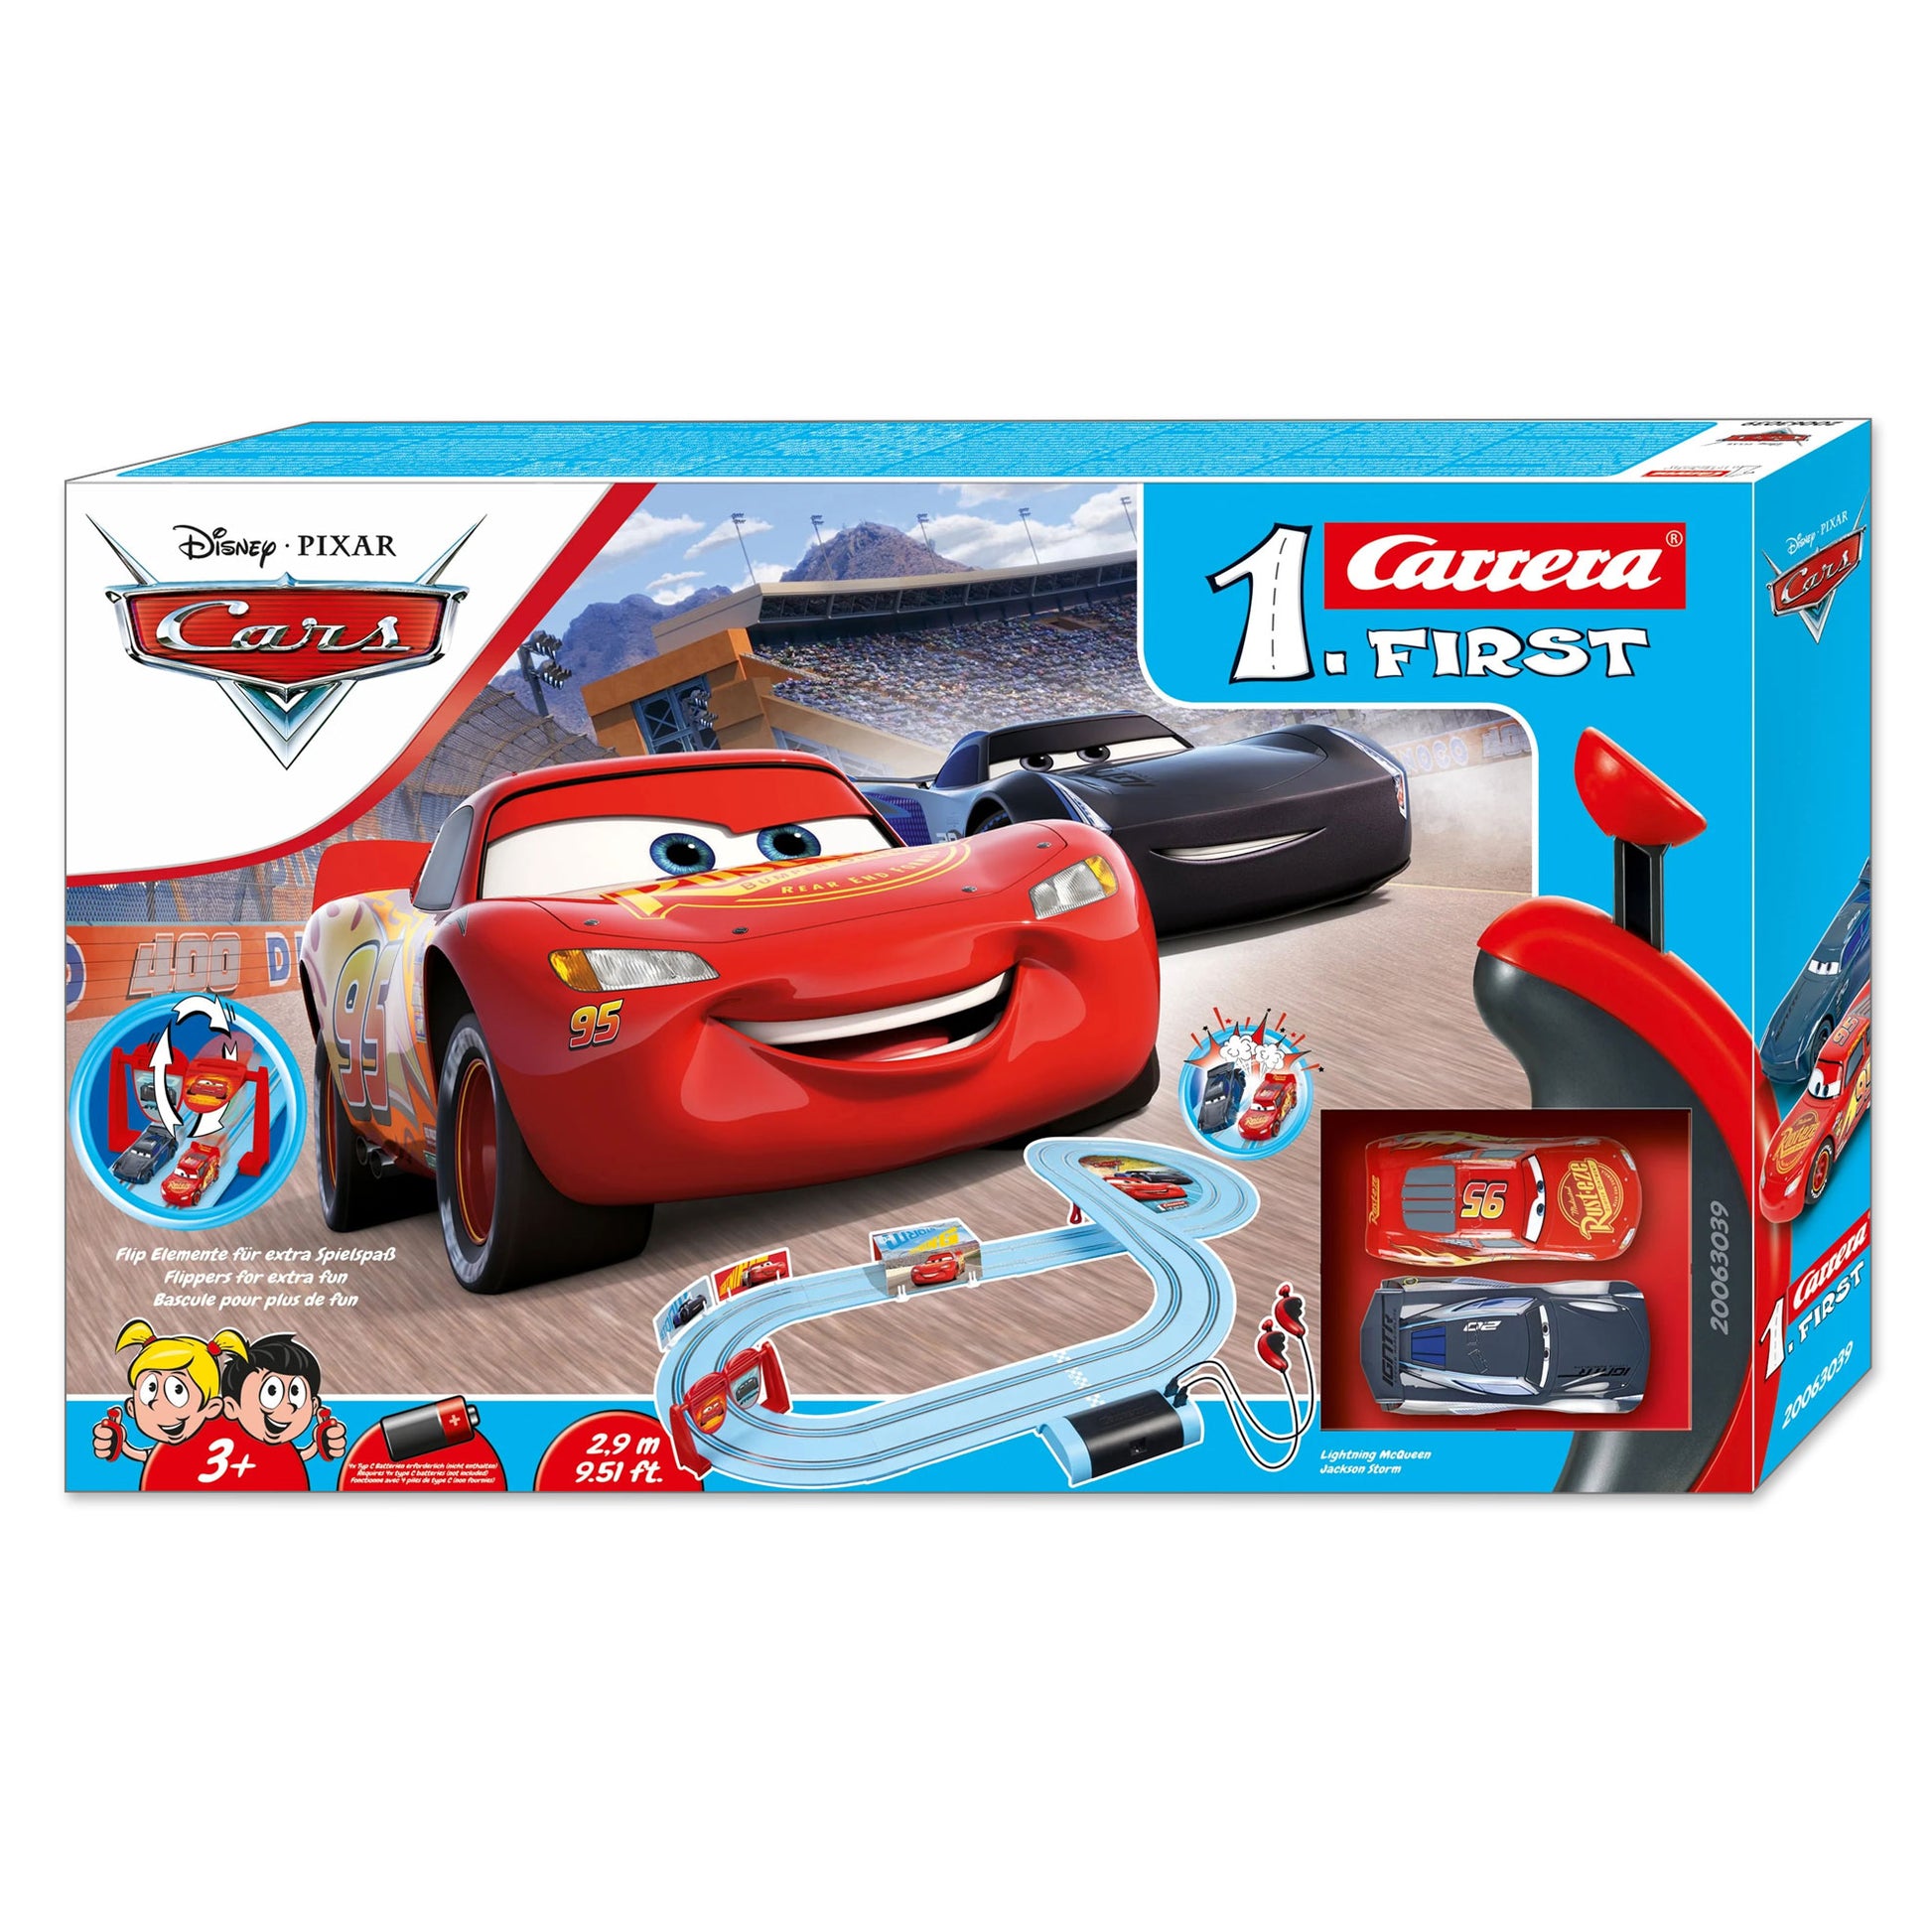 Carrera Slot Car Racing System Disney-Pixar Cars Piston Cup